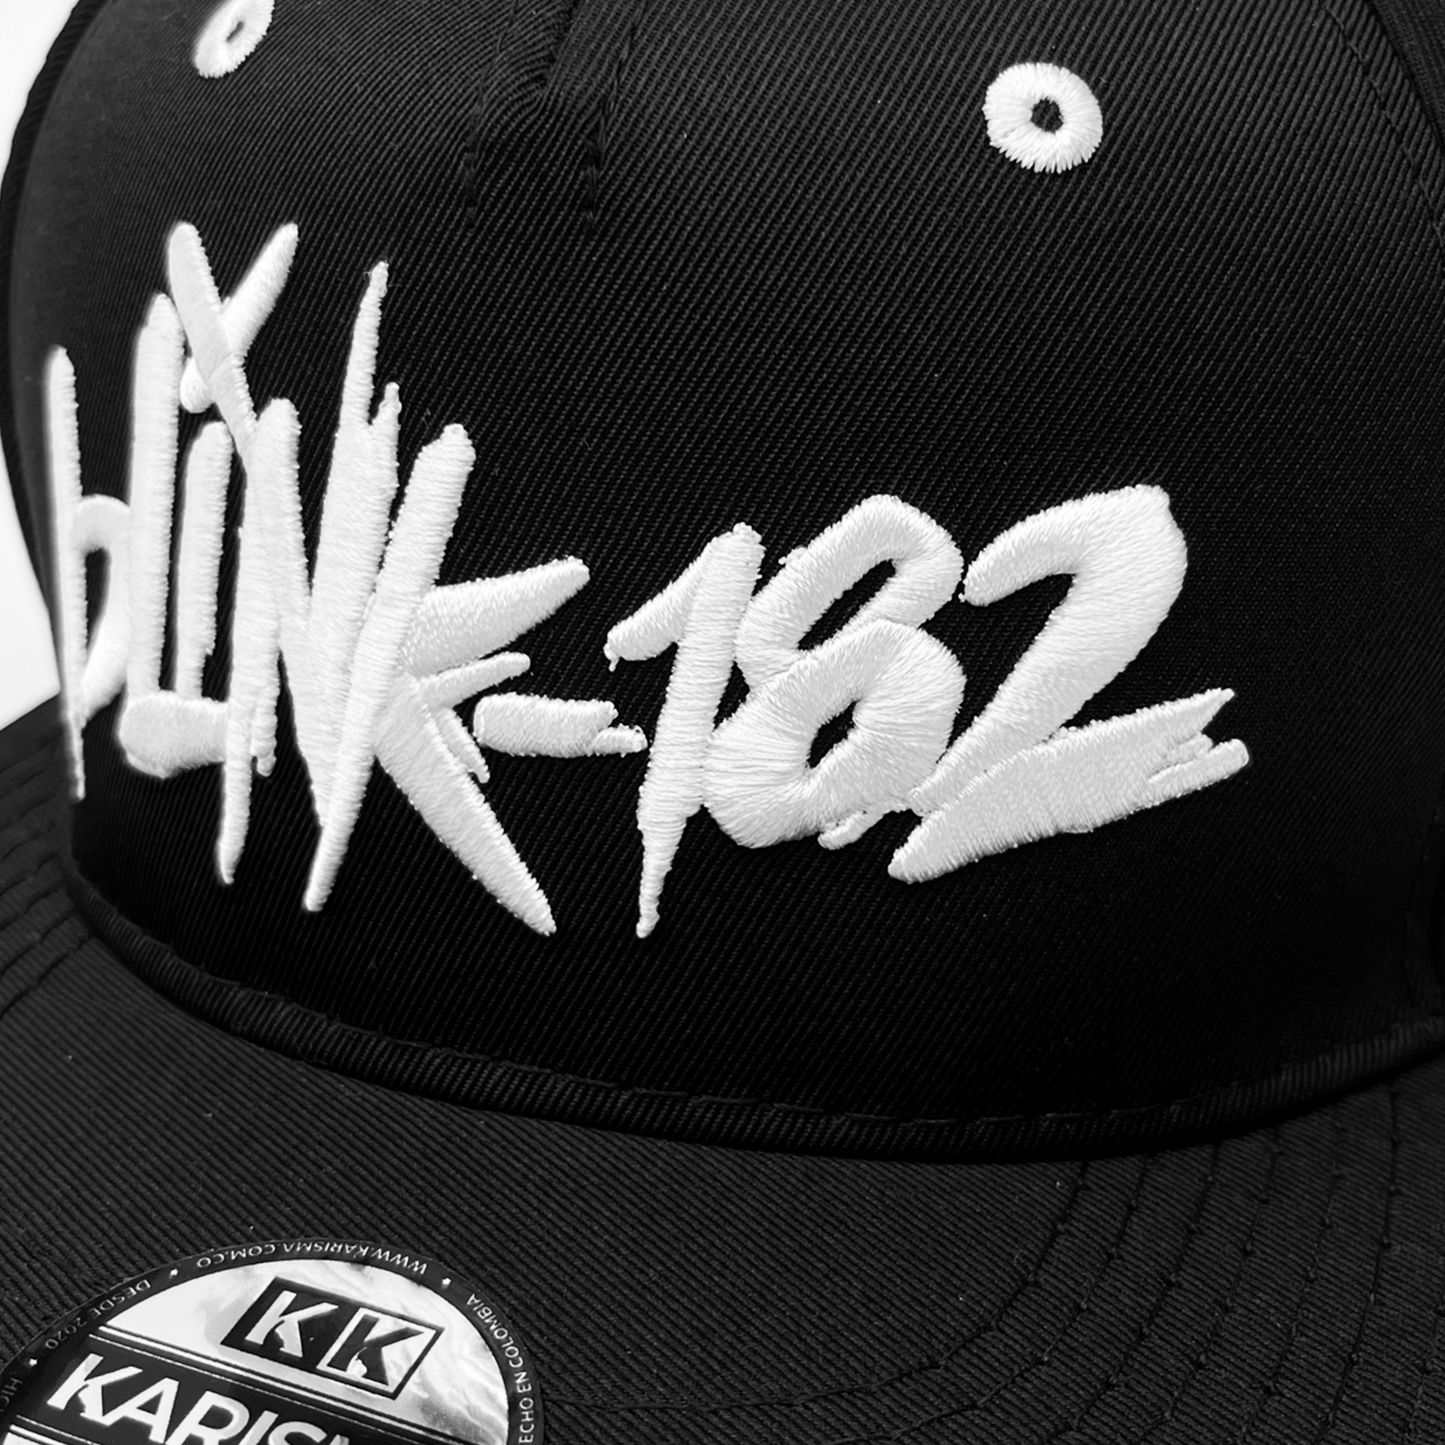 Gorra Karisma Snapback Blink 182 Premium Quality